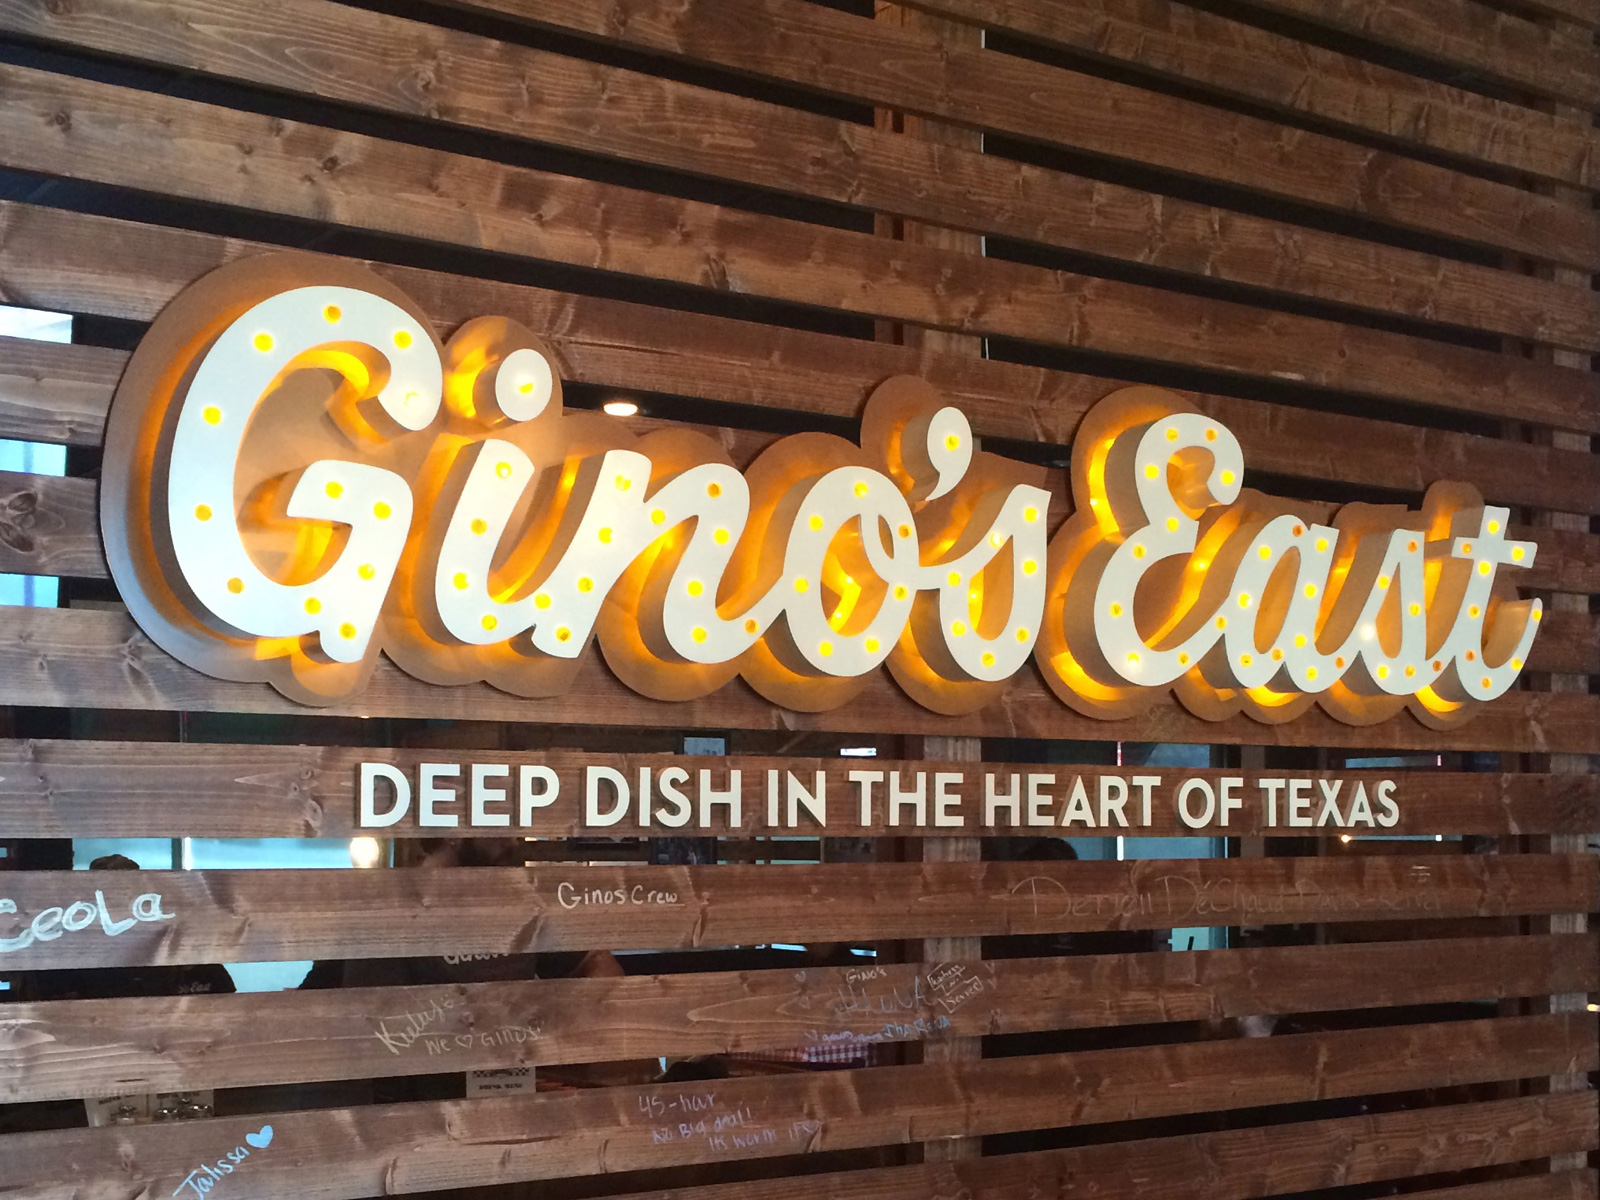 Gino’s East Restaurant